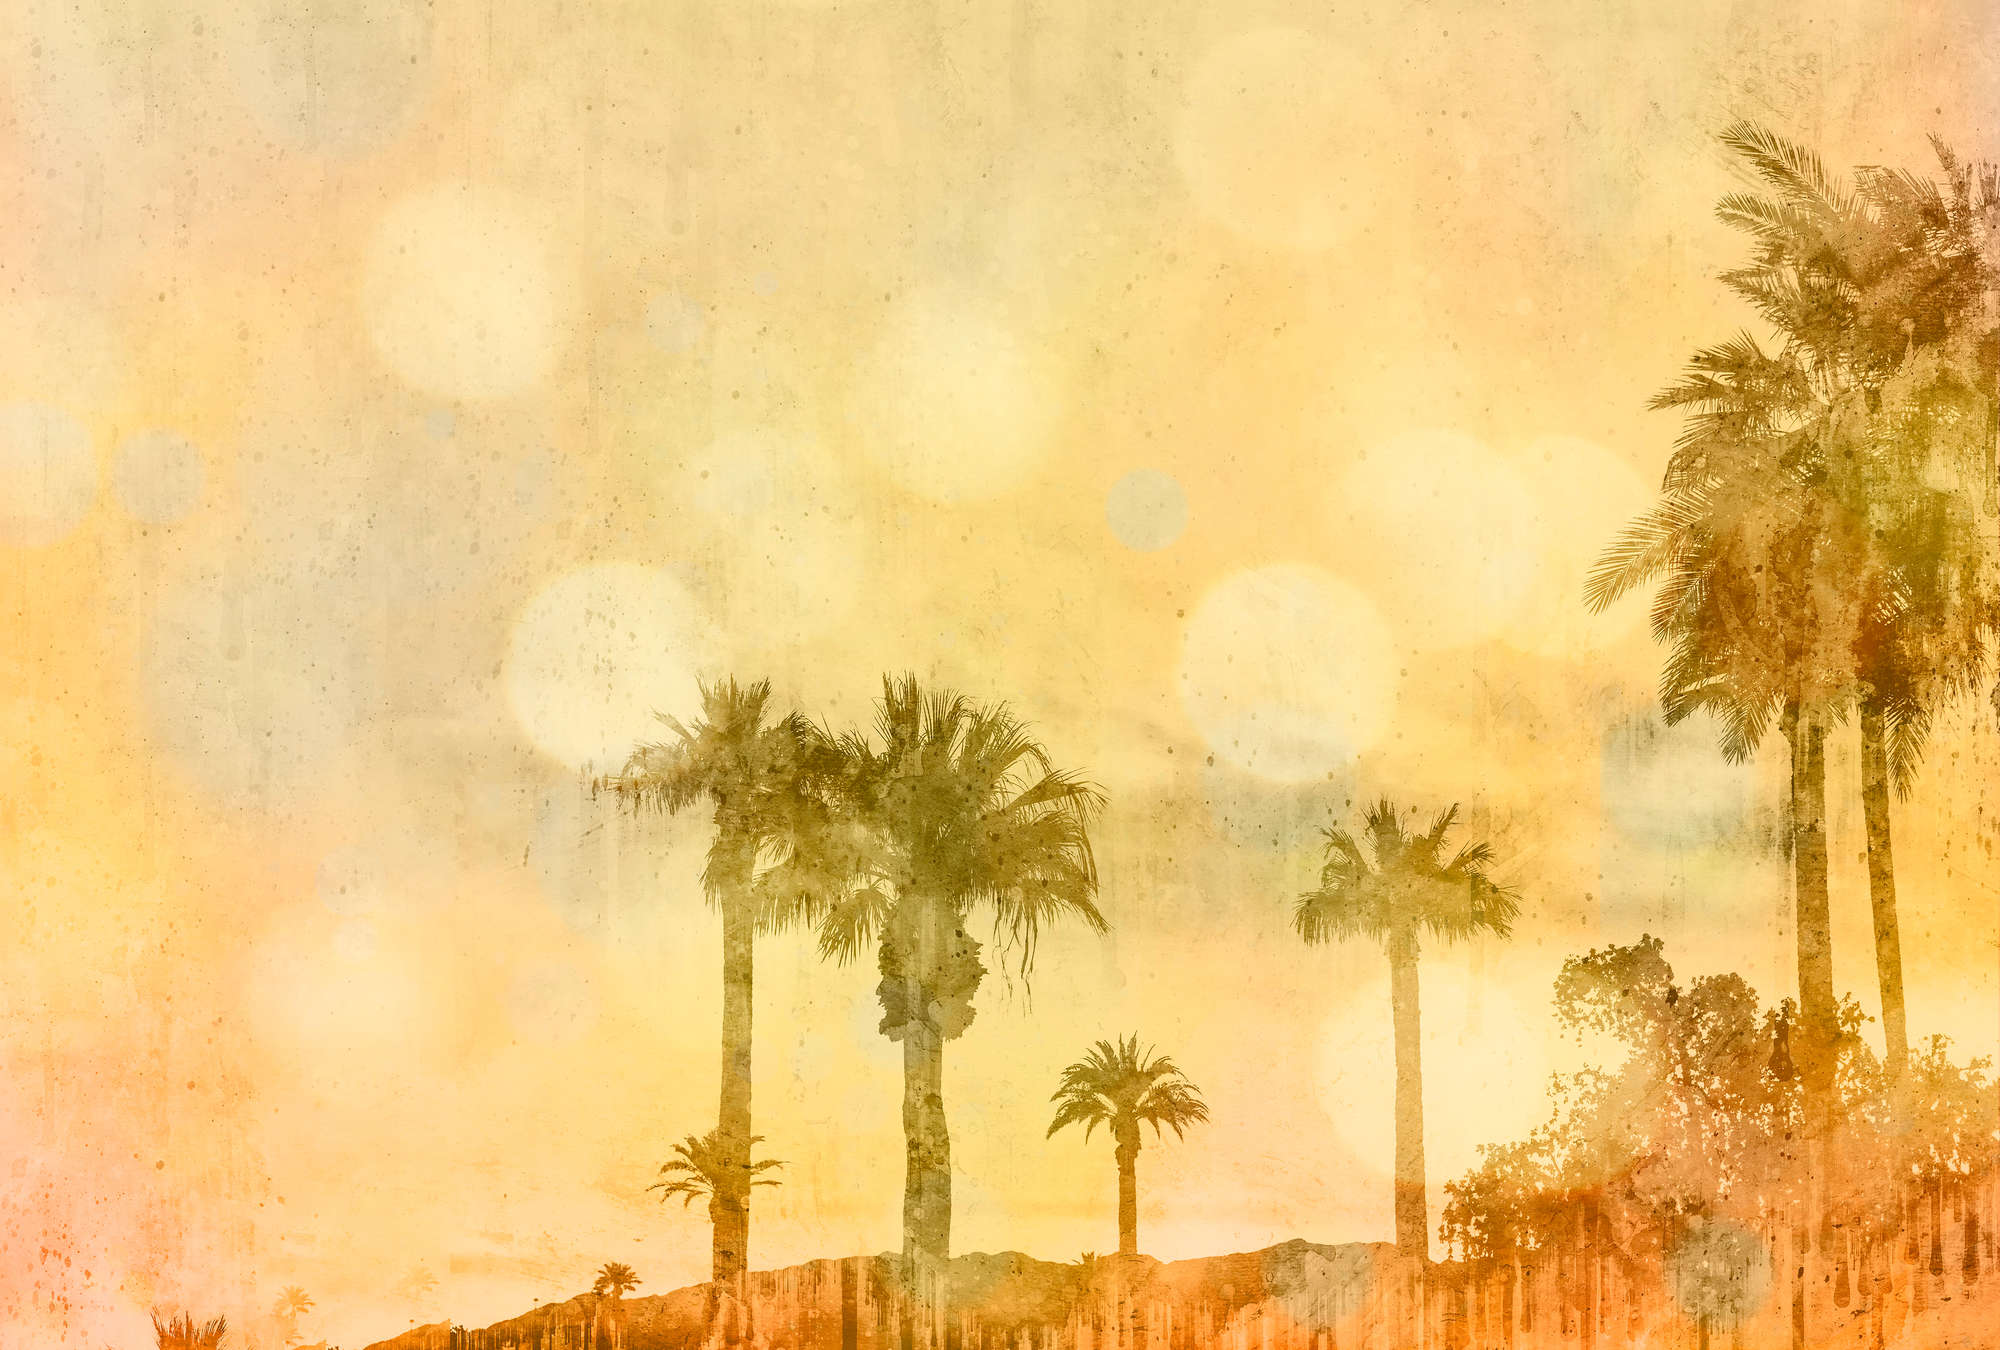             Fototapete Palmenstrand im Sonnenuntergang mit Lichteffekt
        